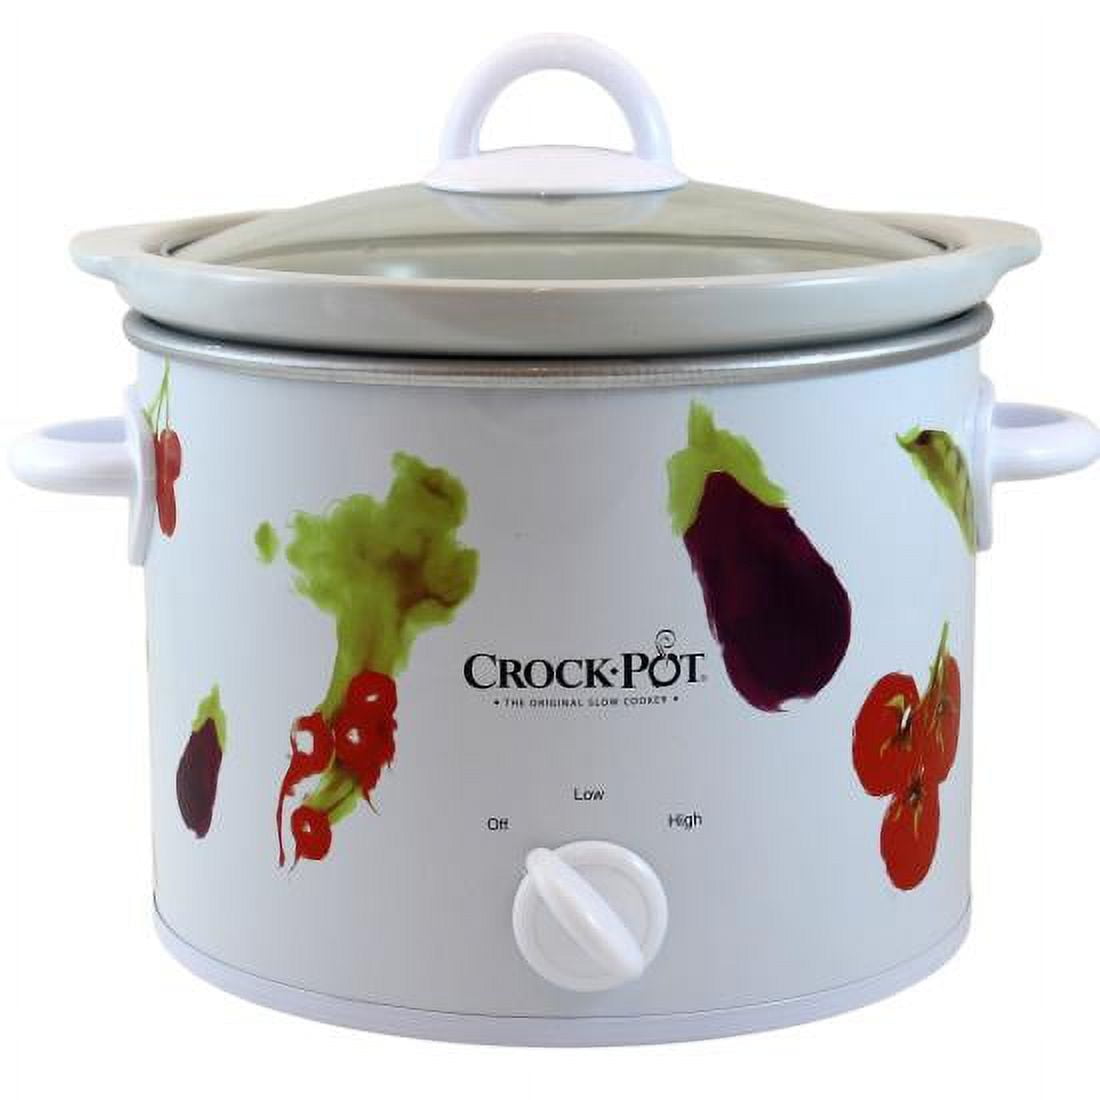 Crock-pot 3040-vg 4-quart Round Manual Slow Cooker